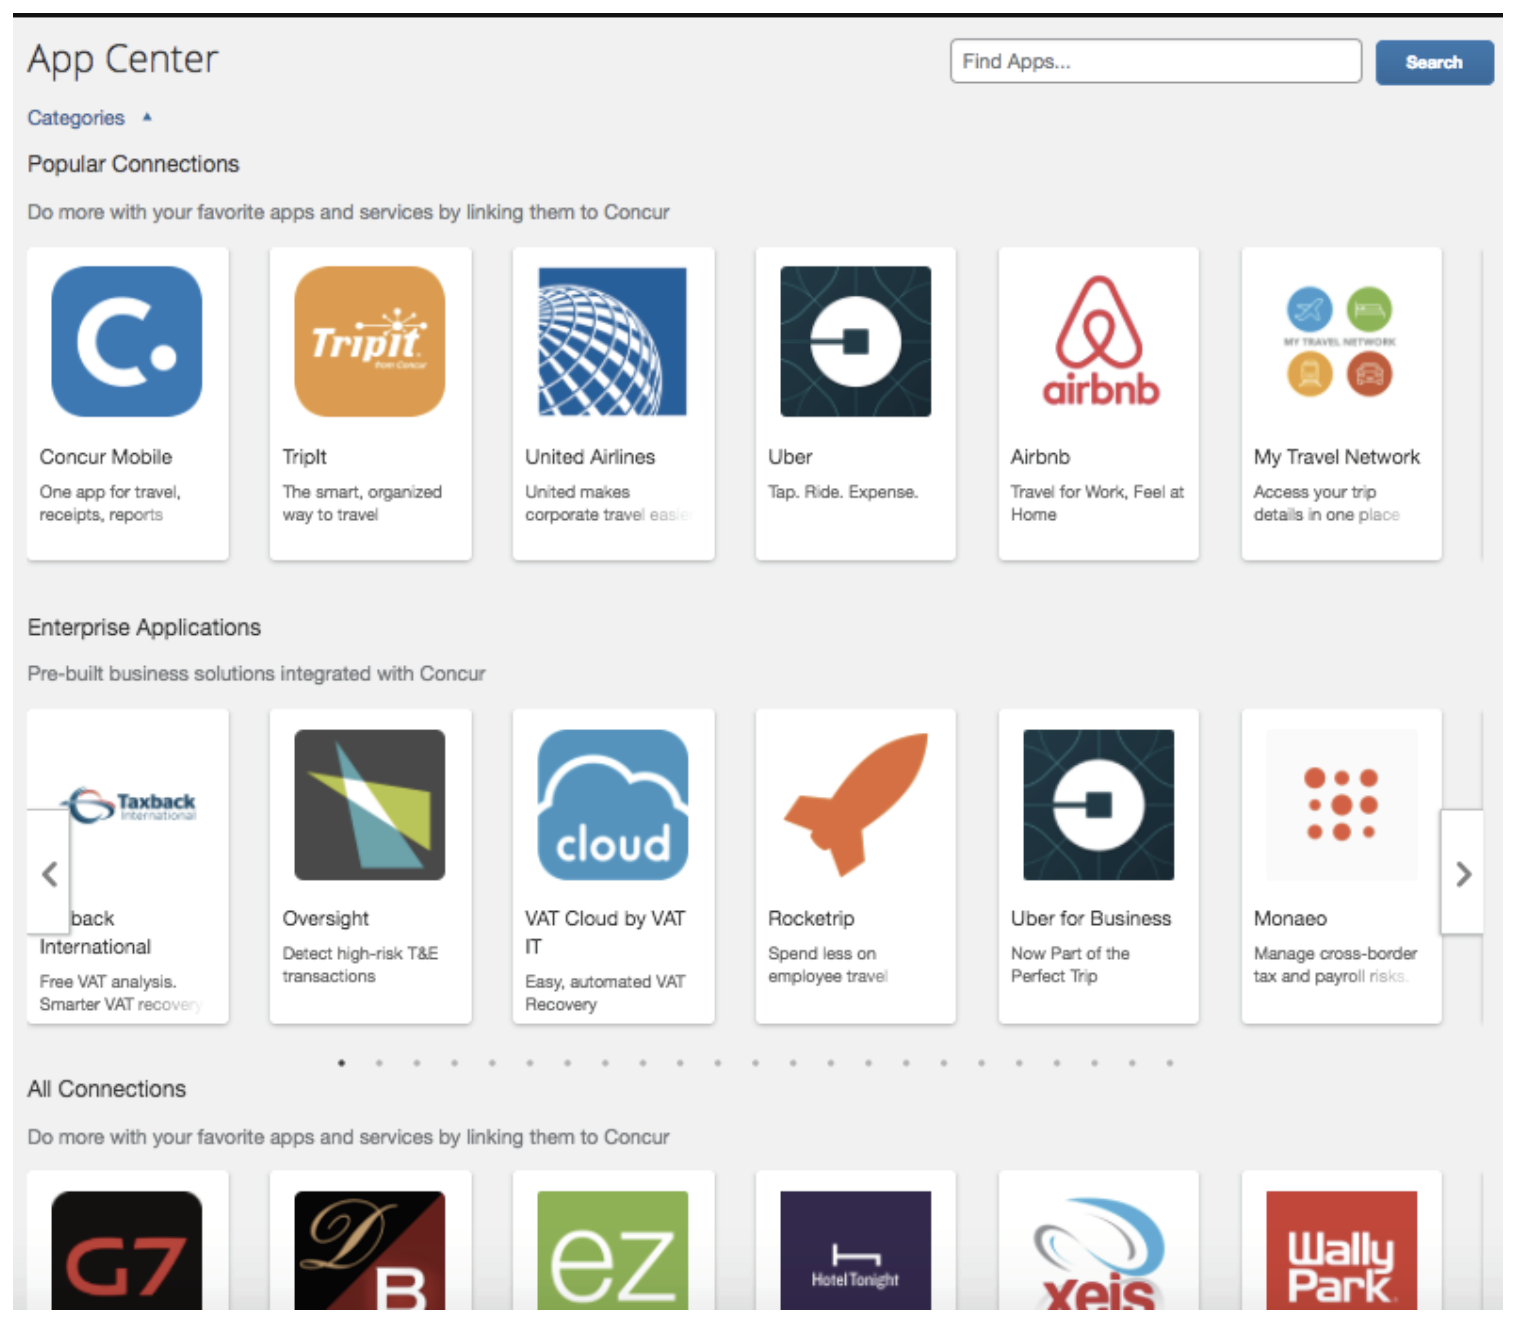 SAP Concur App Center Look - Browser